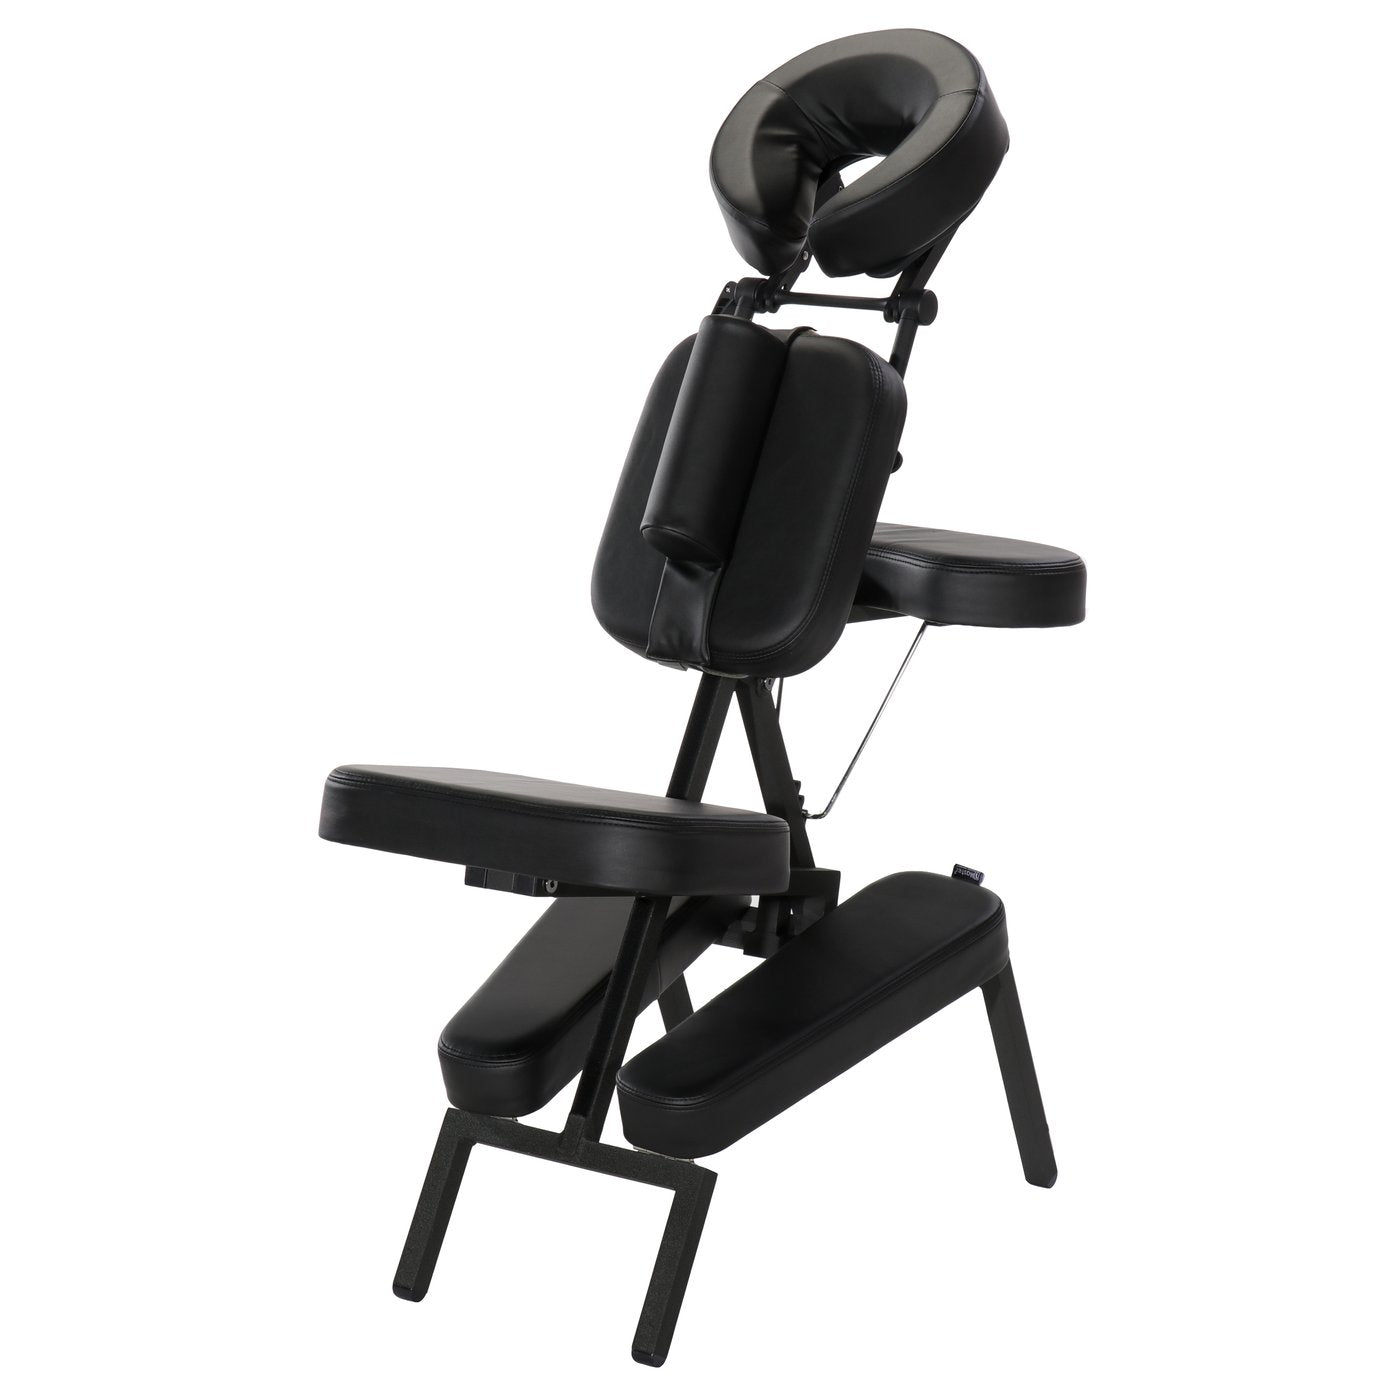 Spa Bodega Husky Apollo Portable Massage Chair Package